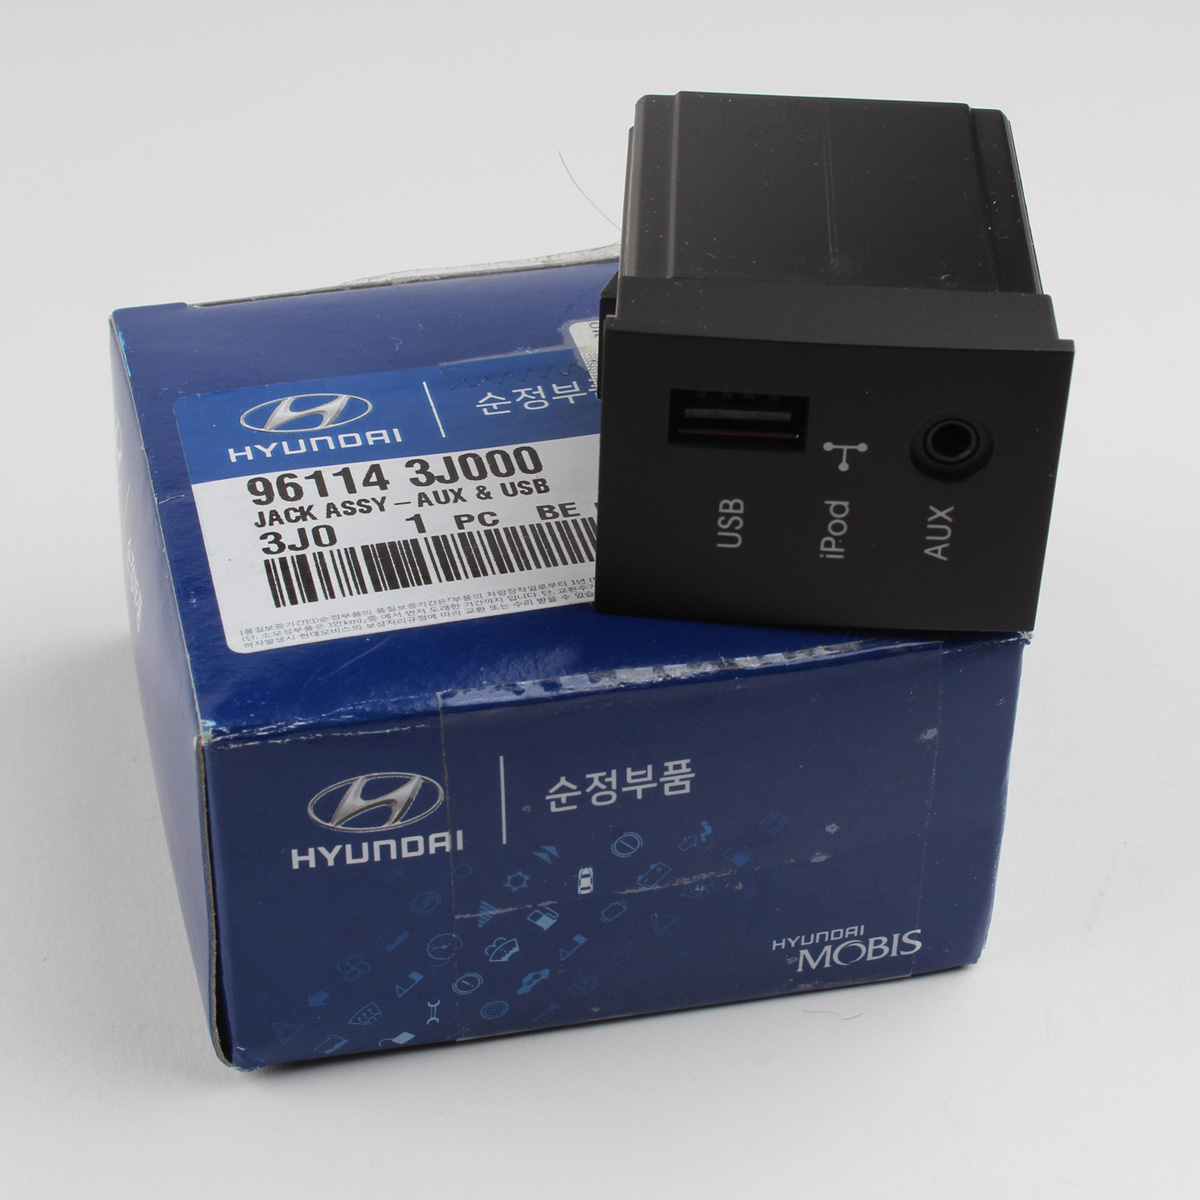 Hyundai Kia (Mobis) Genuine OEM Hyundai USB iPod AUX Port Adapter for Veracruz 96114-3J000